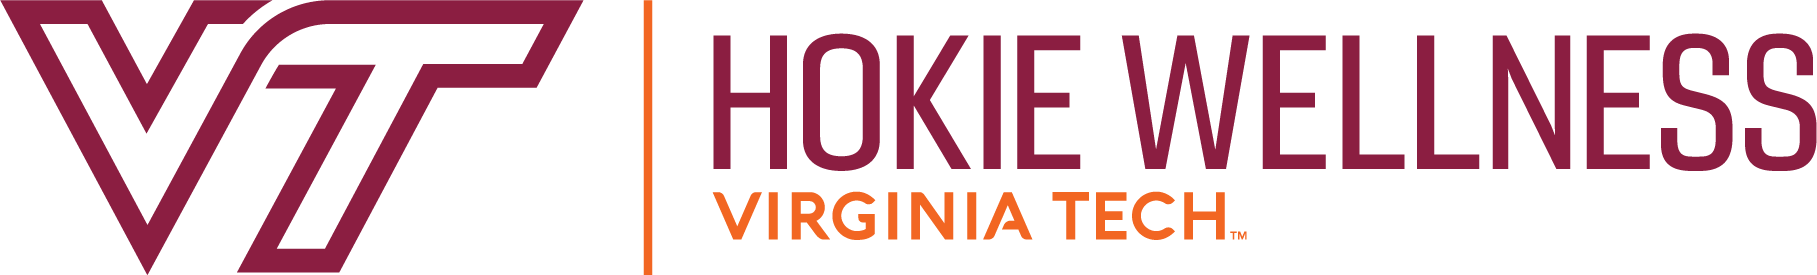 hokie wellness logo